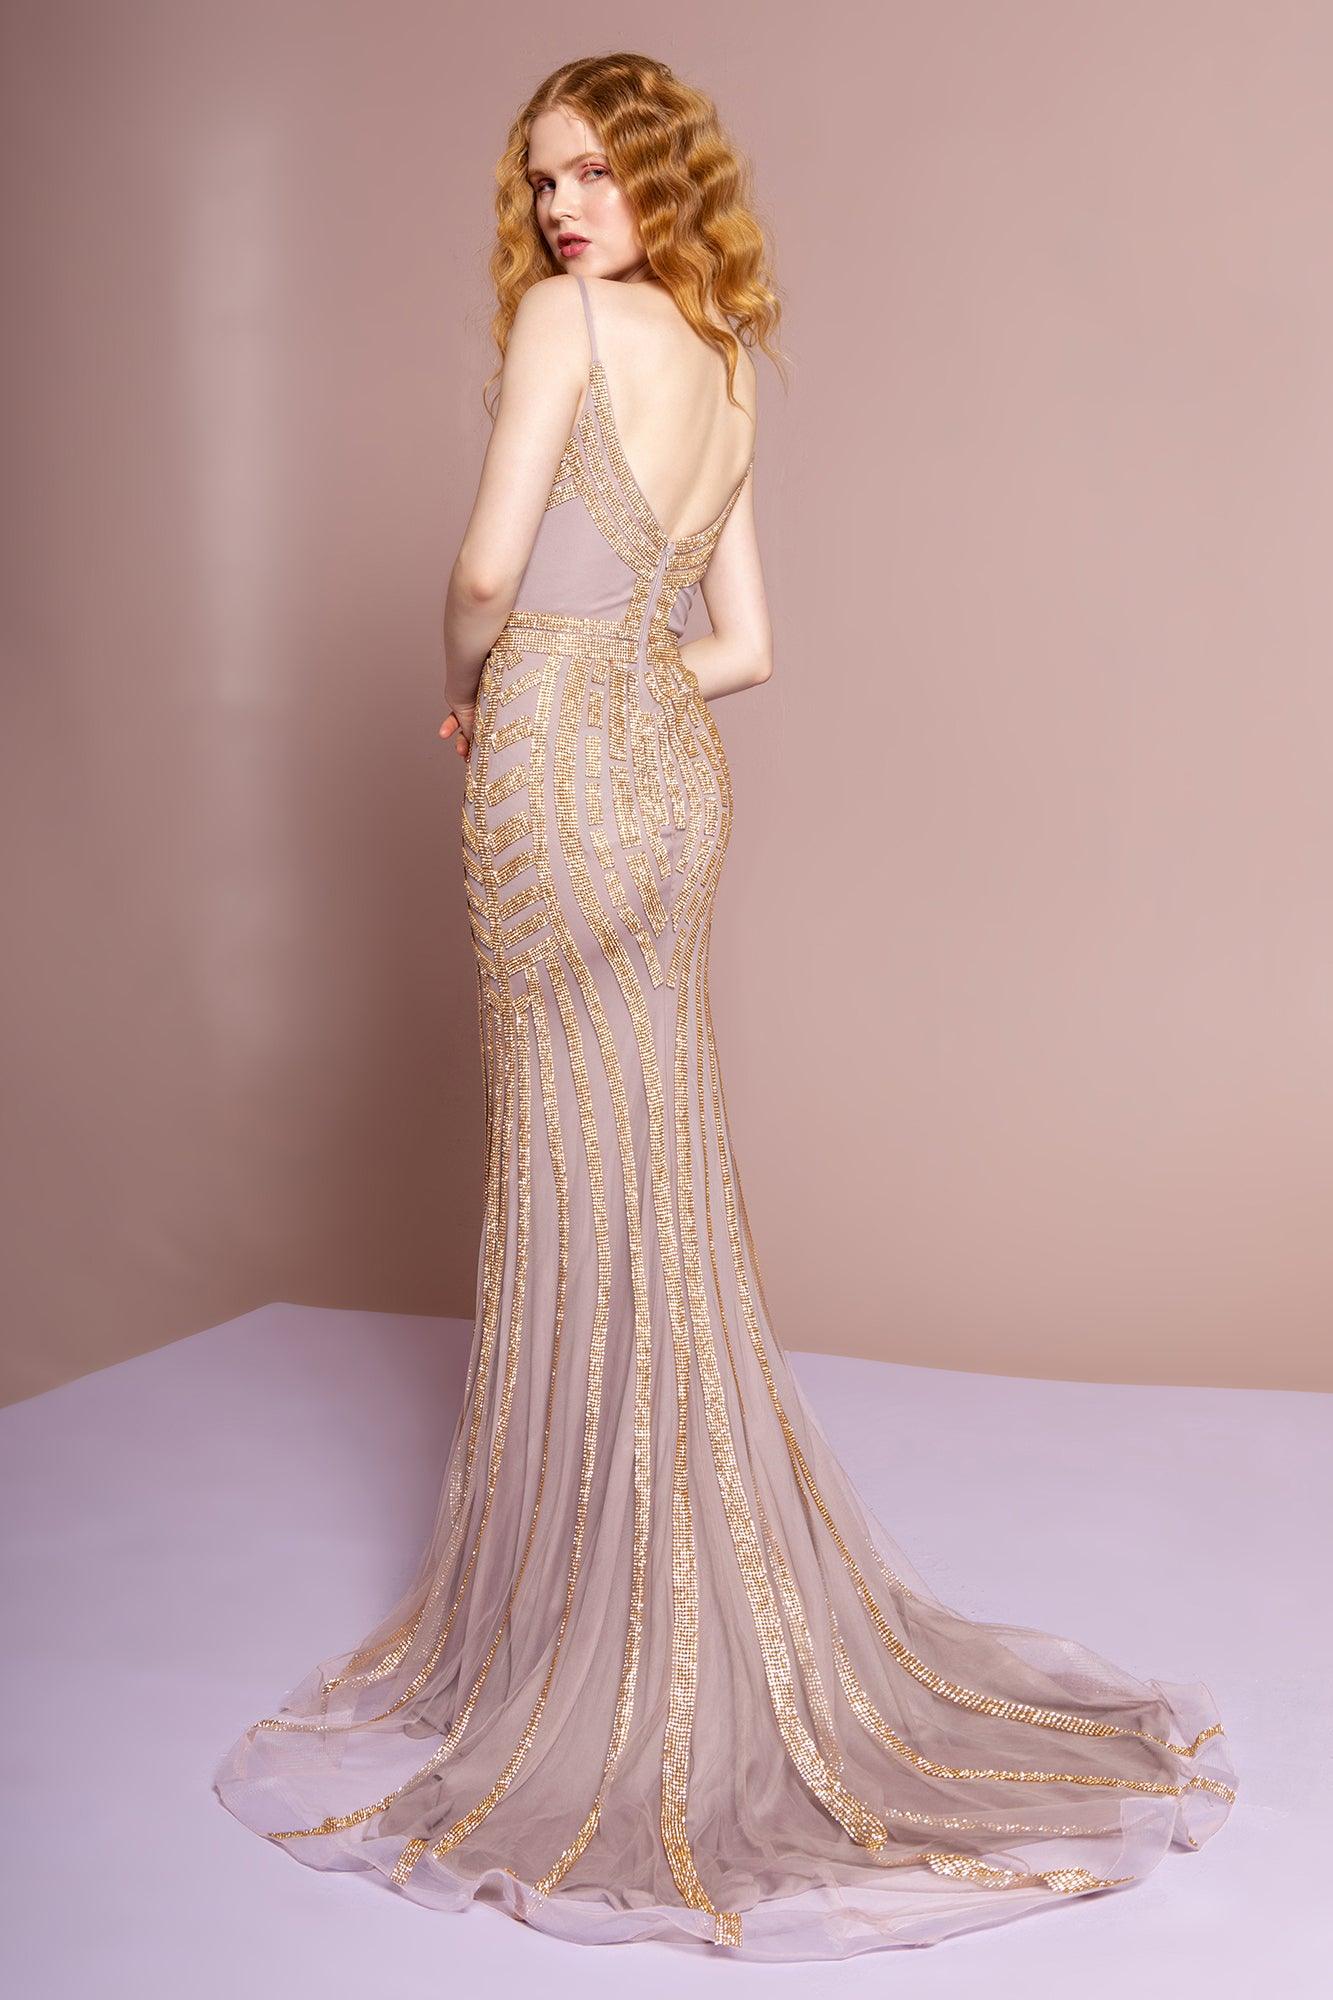 Formal Sweetheart Long Prom Dress All Beaded - The Dress Outlet Elizabeth K